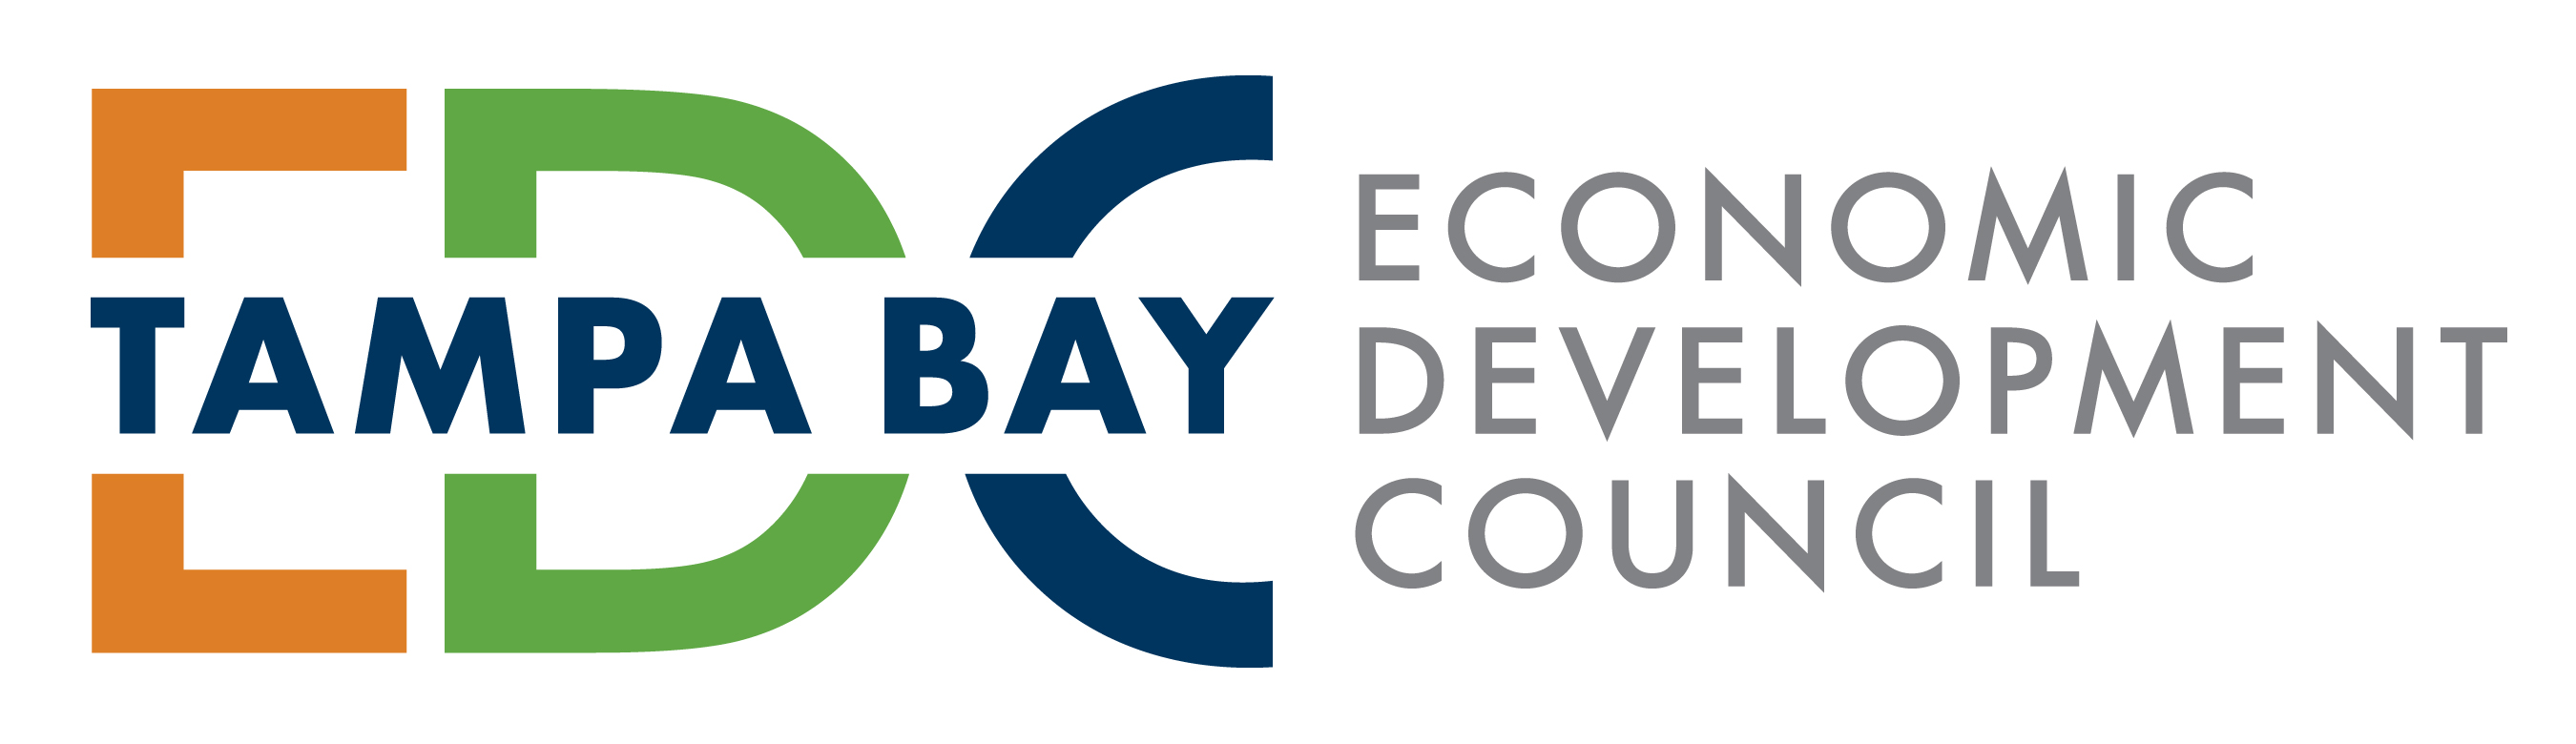 Hillsborough County economic development incentives - Tampa Bay Business  Journal